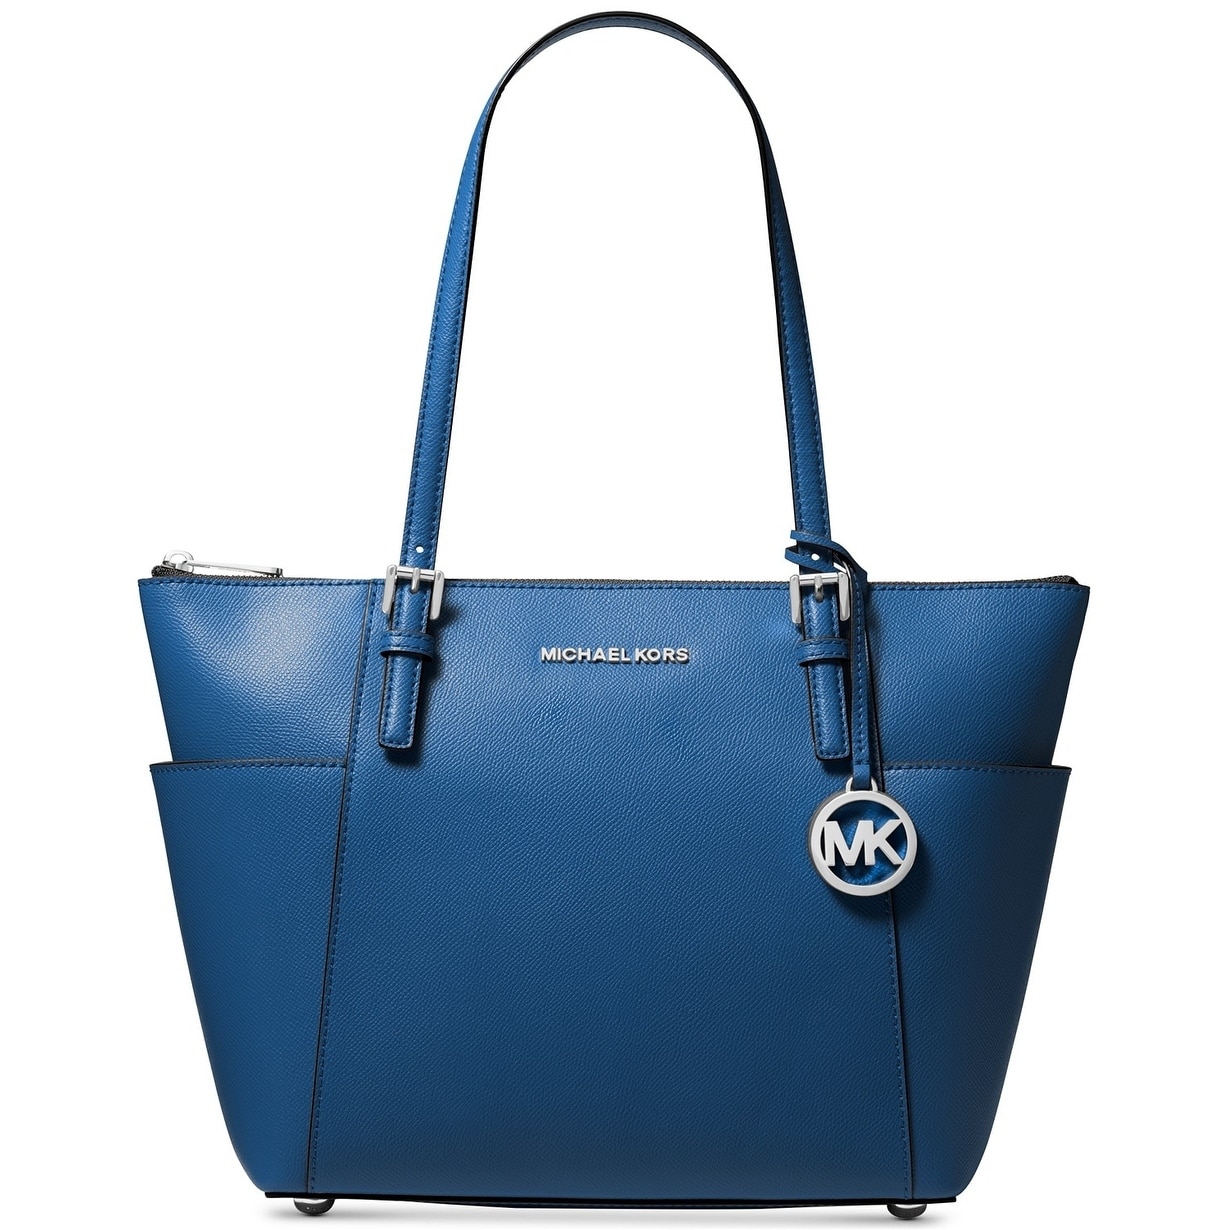 blue MK handbags